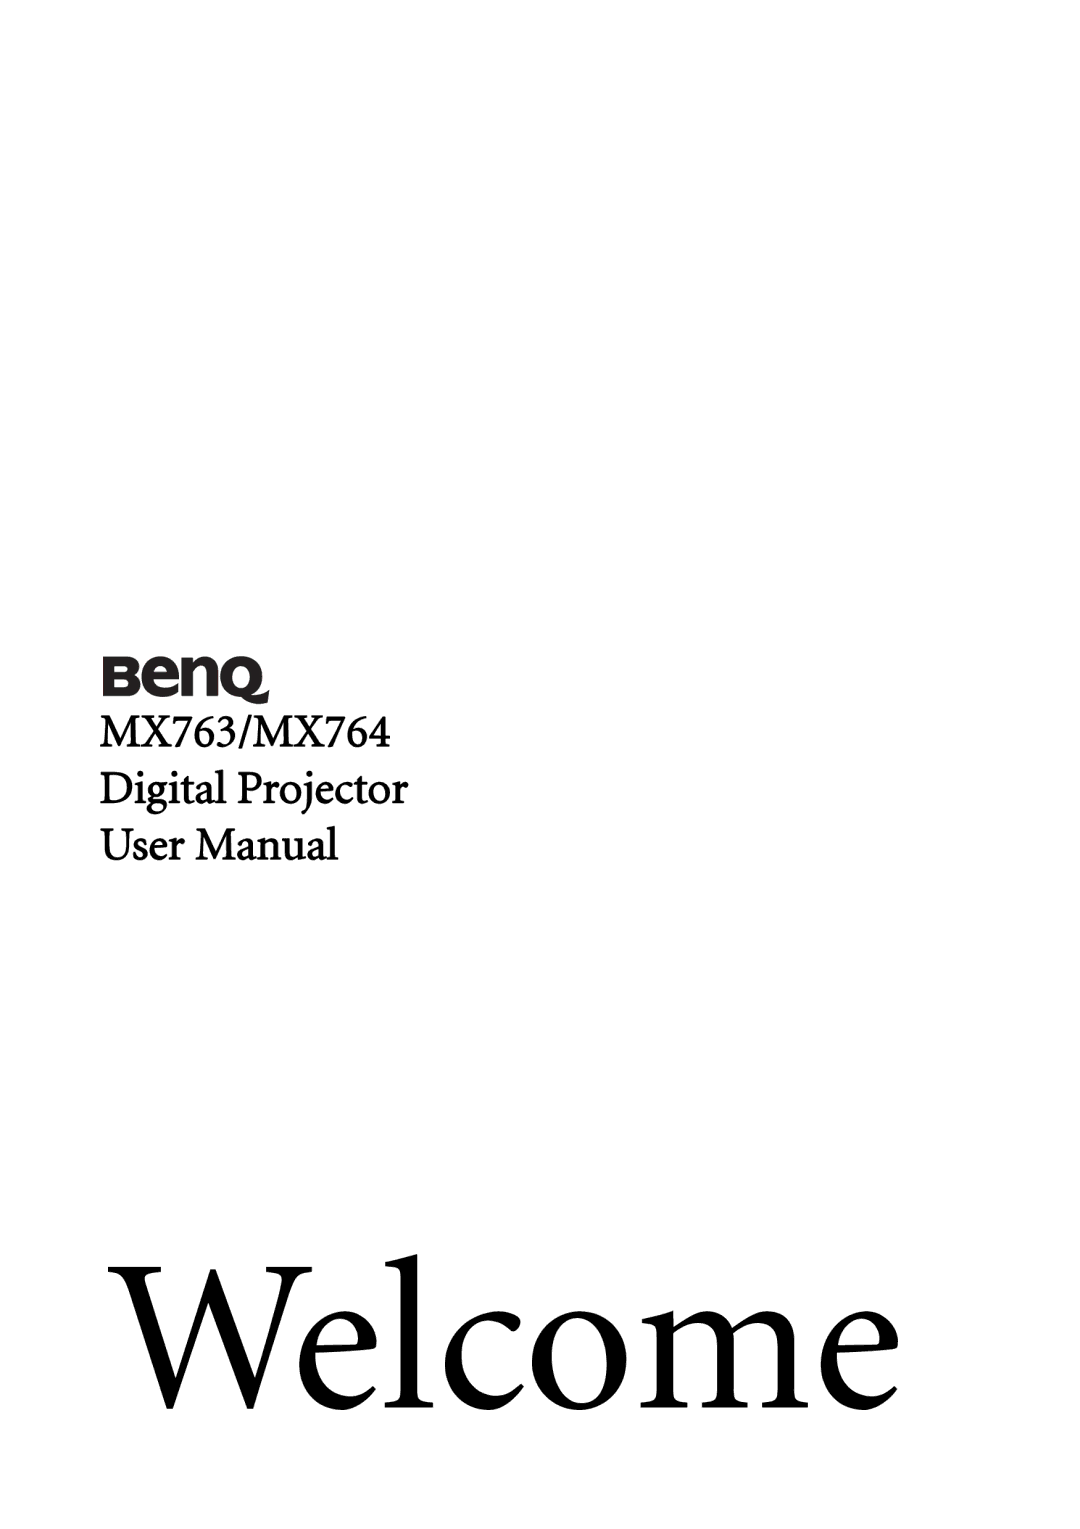 BenQ user manual Welcome, MX763/MX764 Digital Projector 